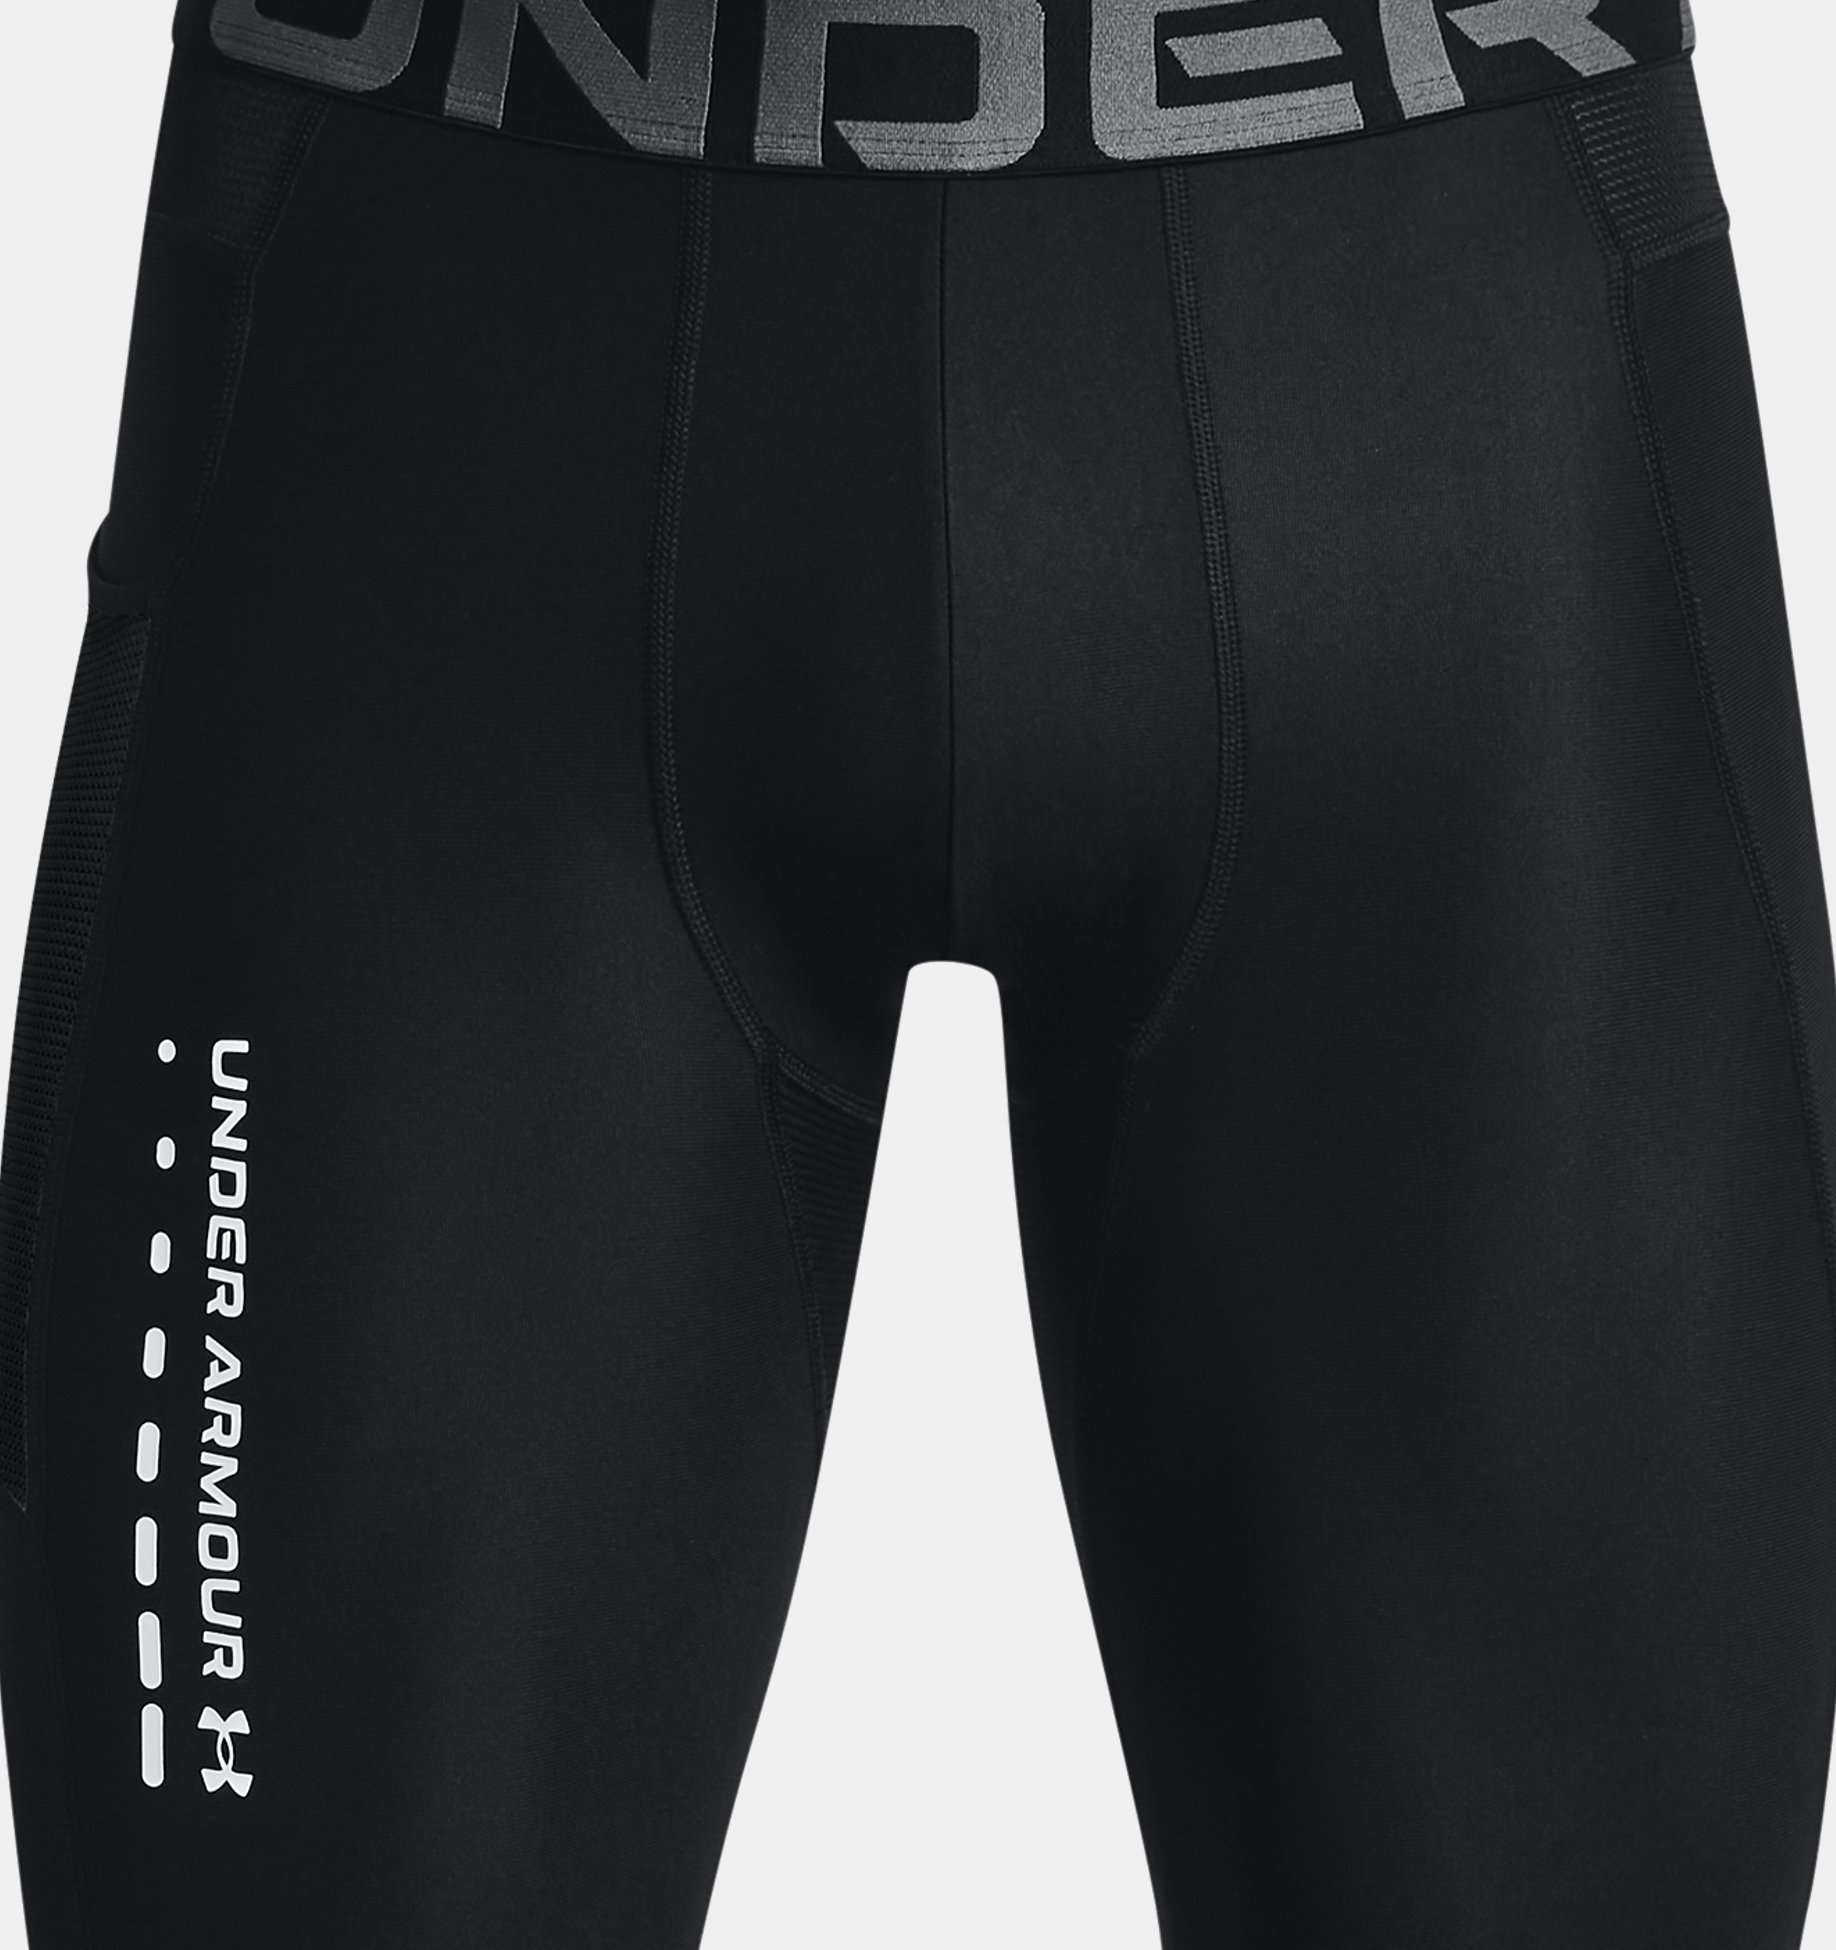 aceptable Excelente Rechazar Men's HeatGear® Vent Compression Shorts | Under Armour